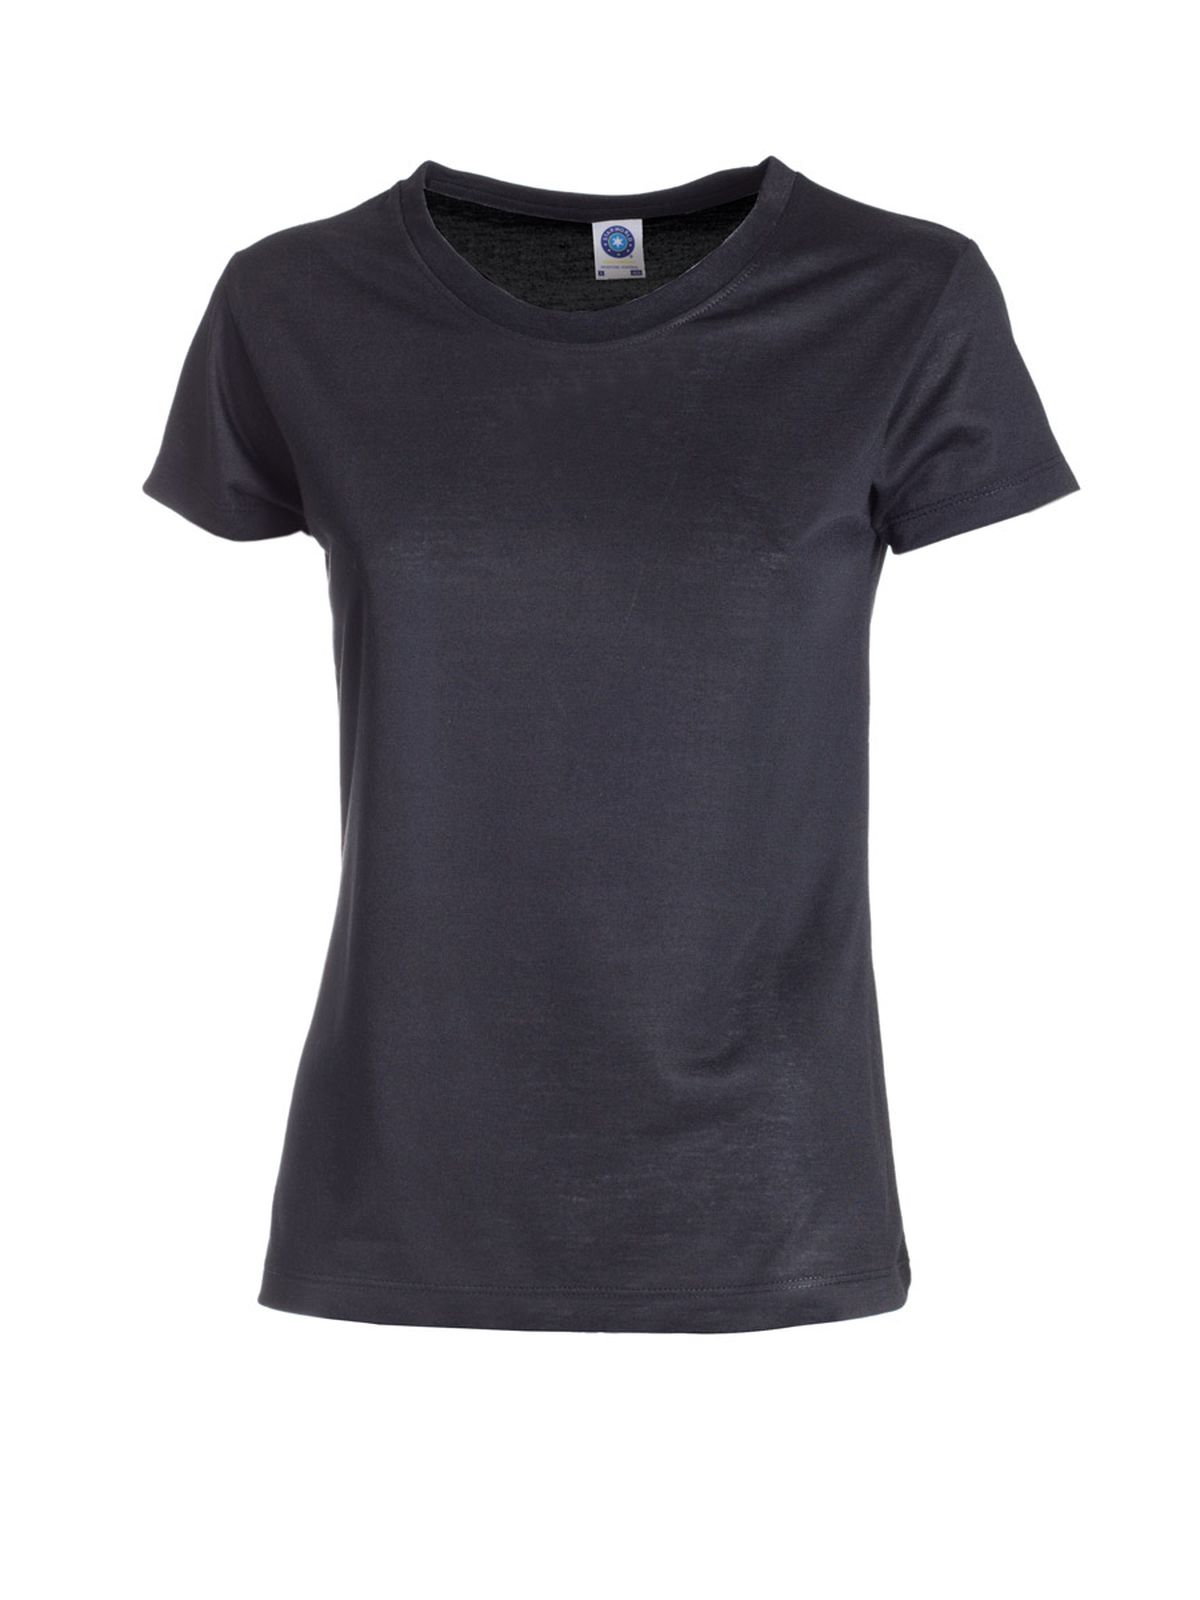 gold-label-ladies-retail-t-shirt-black.webp